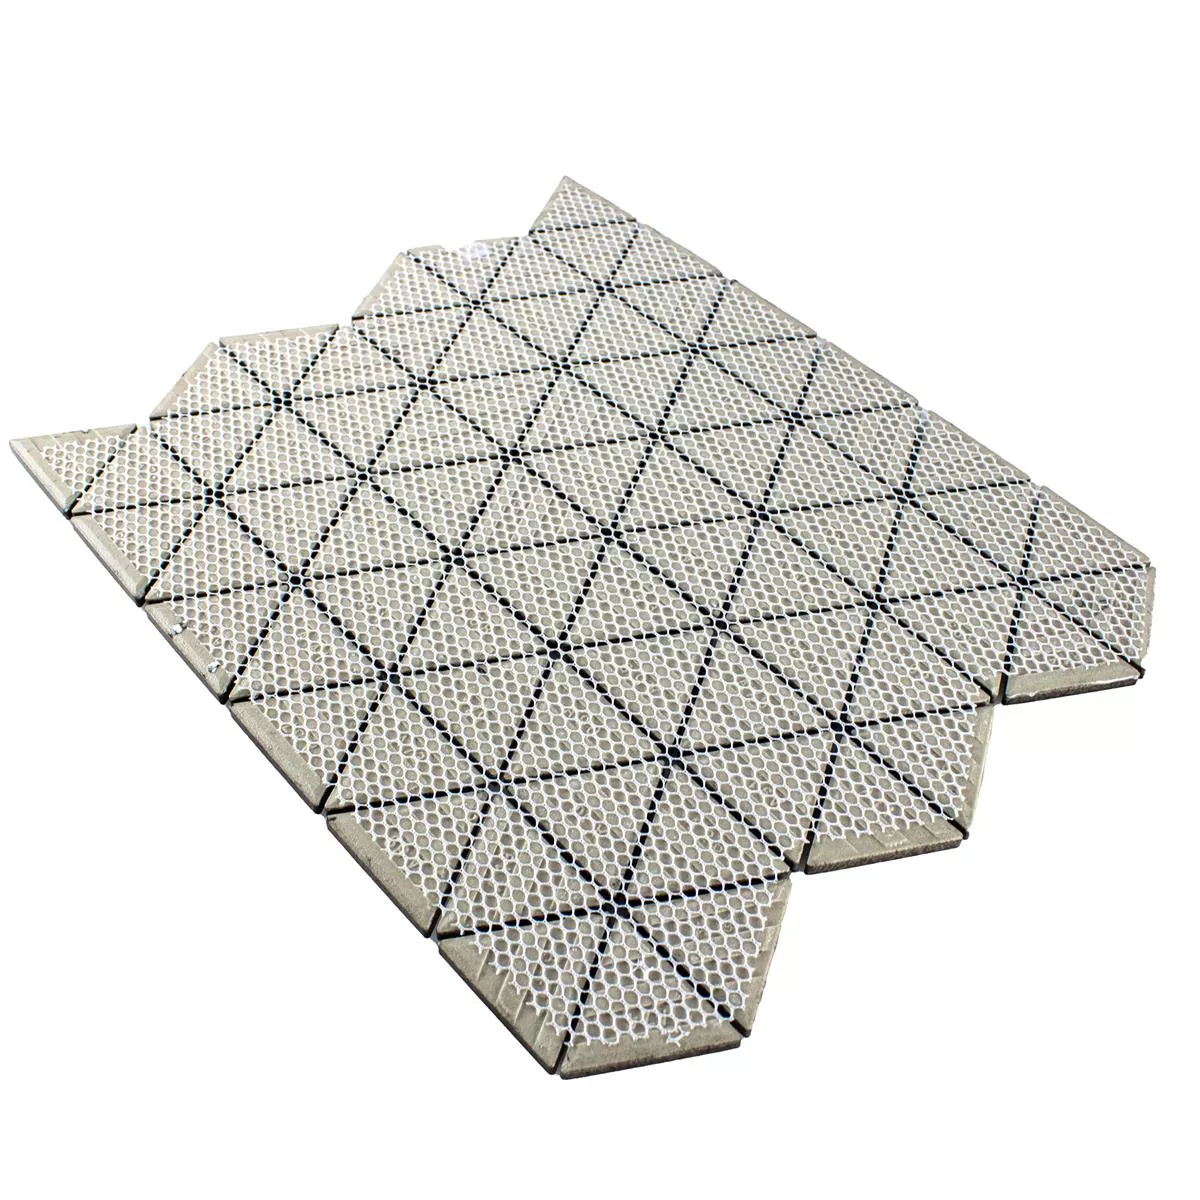 Sample Ceramic Mosaic Tiles Arvada Triangle Black Glossy